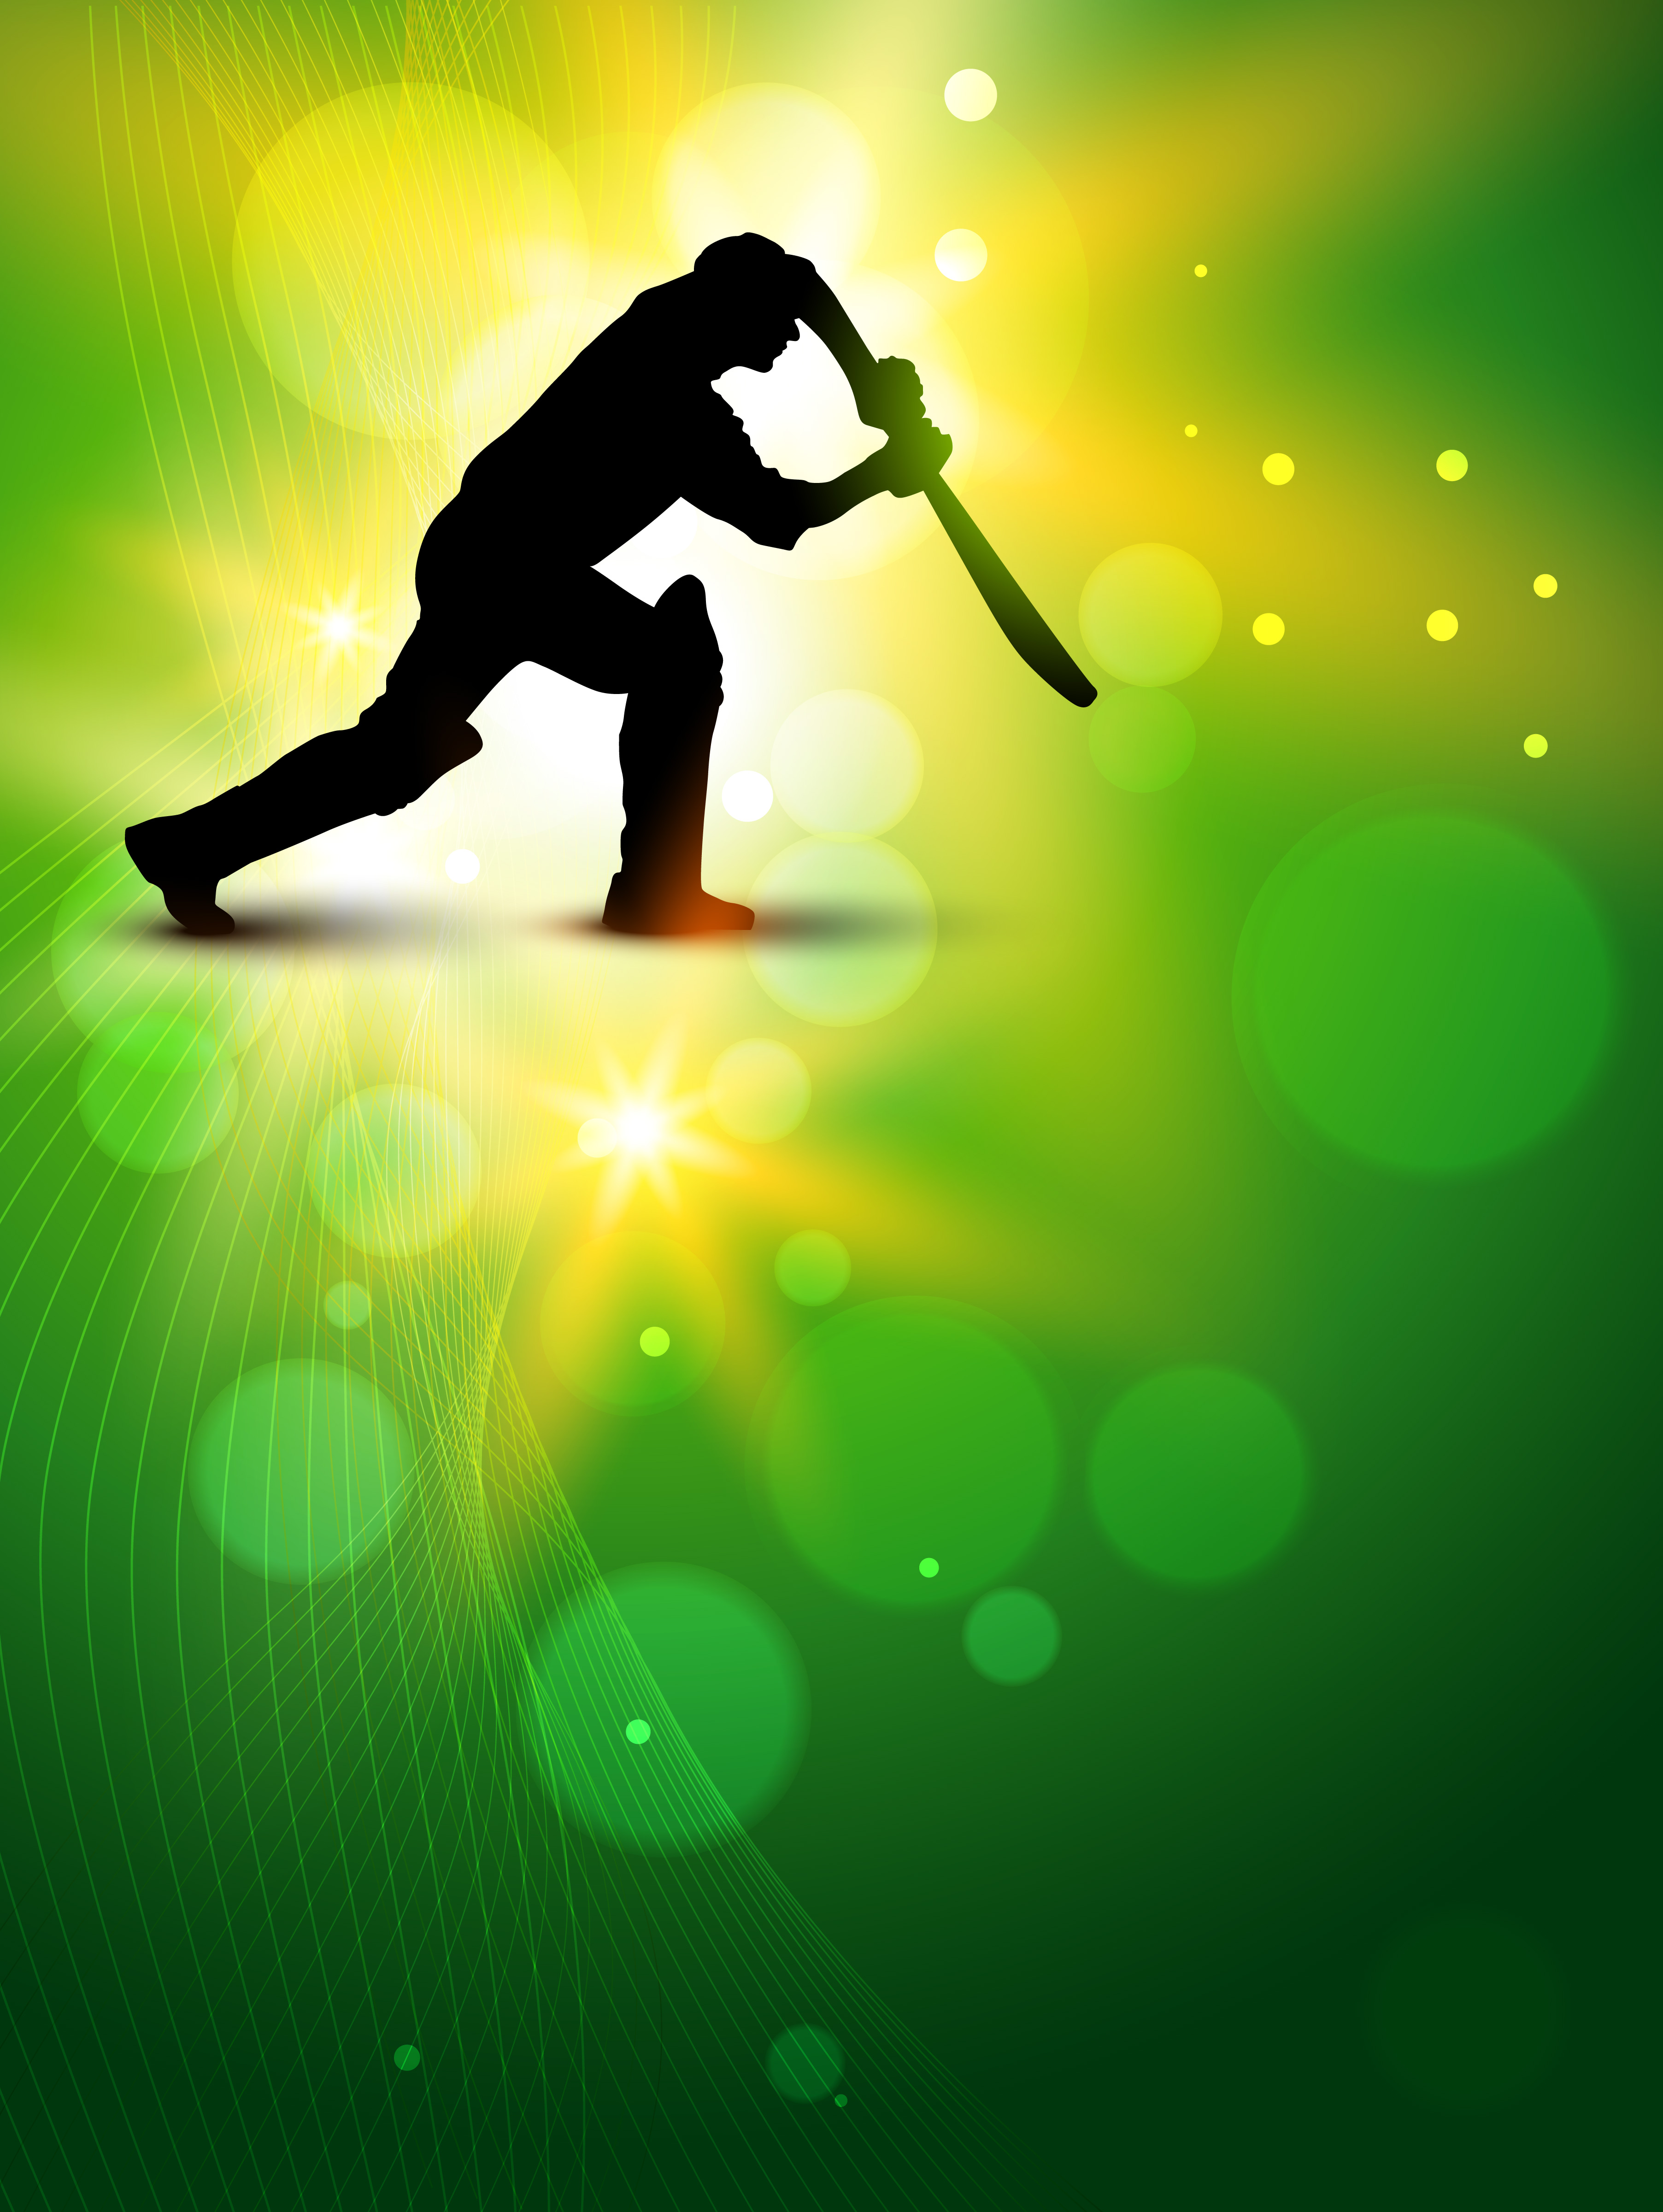 vector cricket background - Download Free Vectors, Clipart Graphics & Vector Art